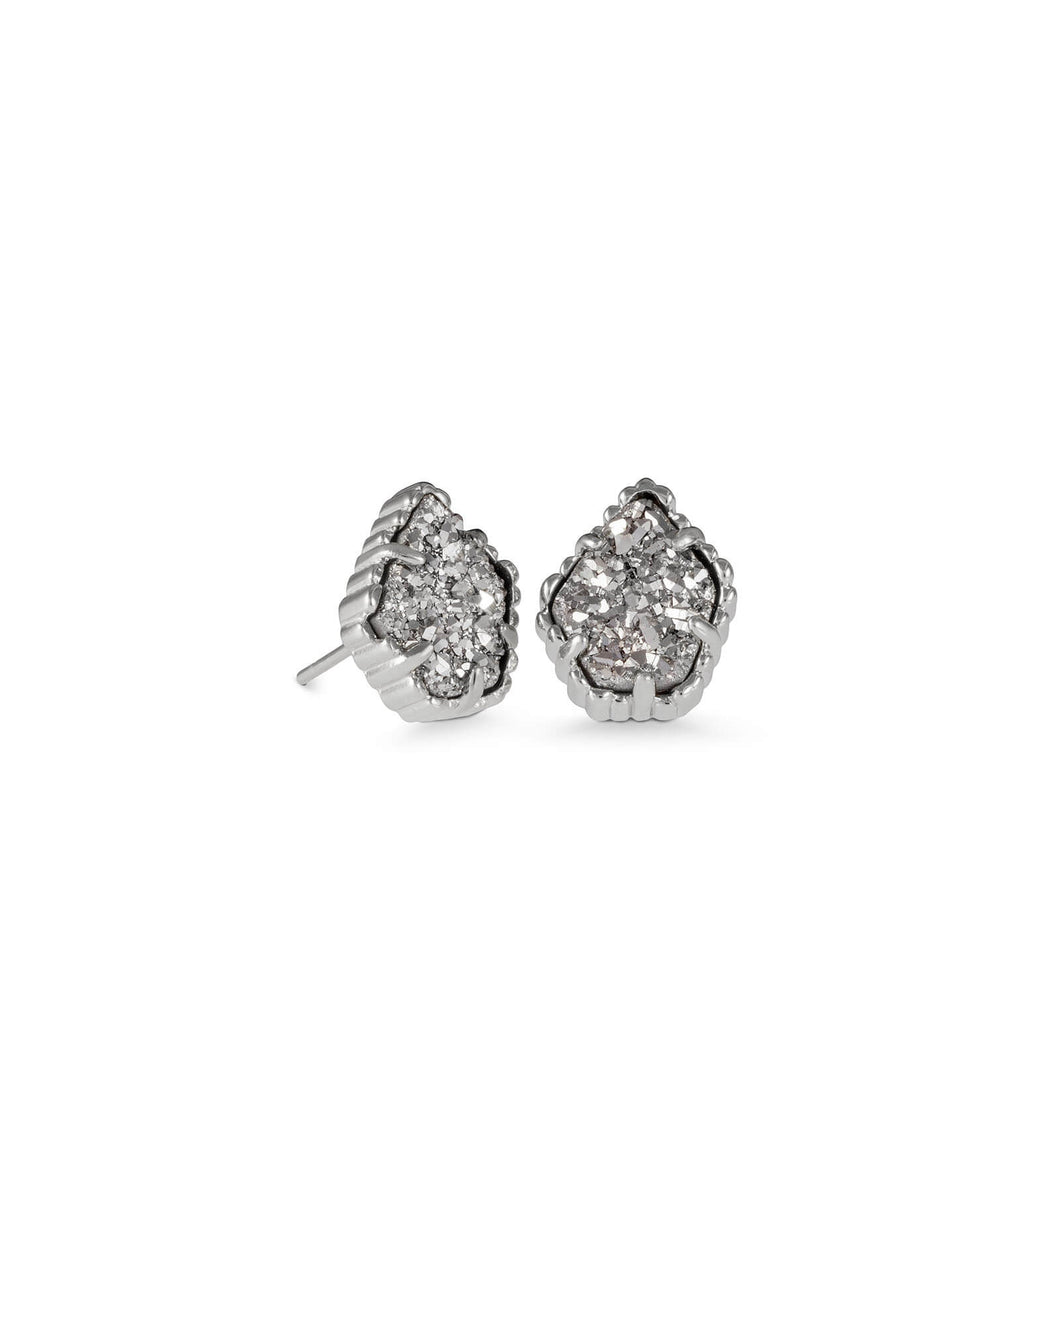 Kendra Scott Tessa Silver Stud Earring in Platinum Drusy